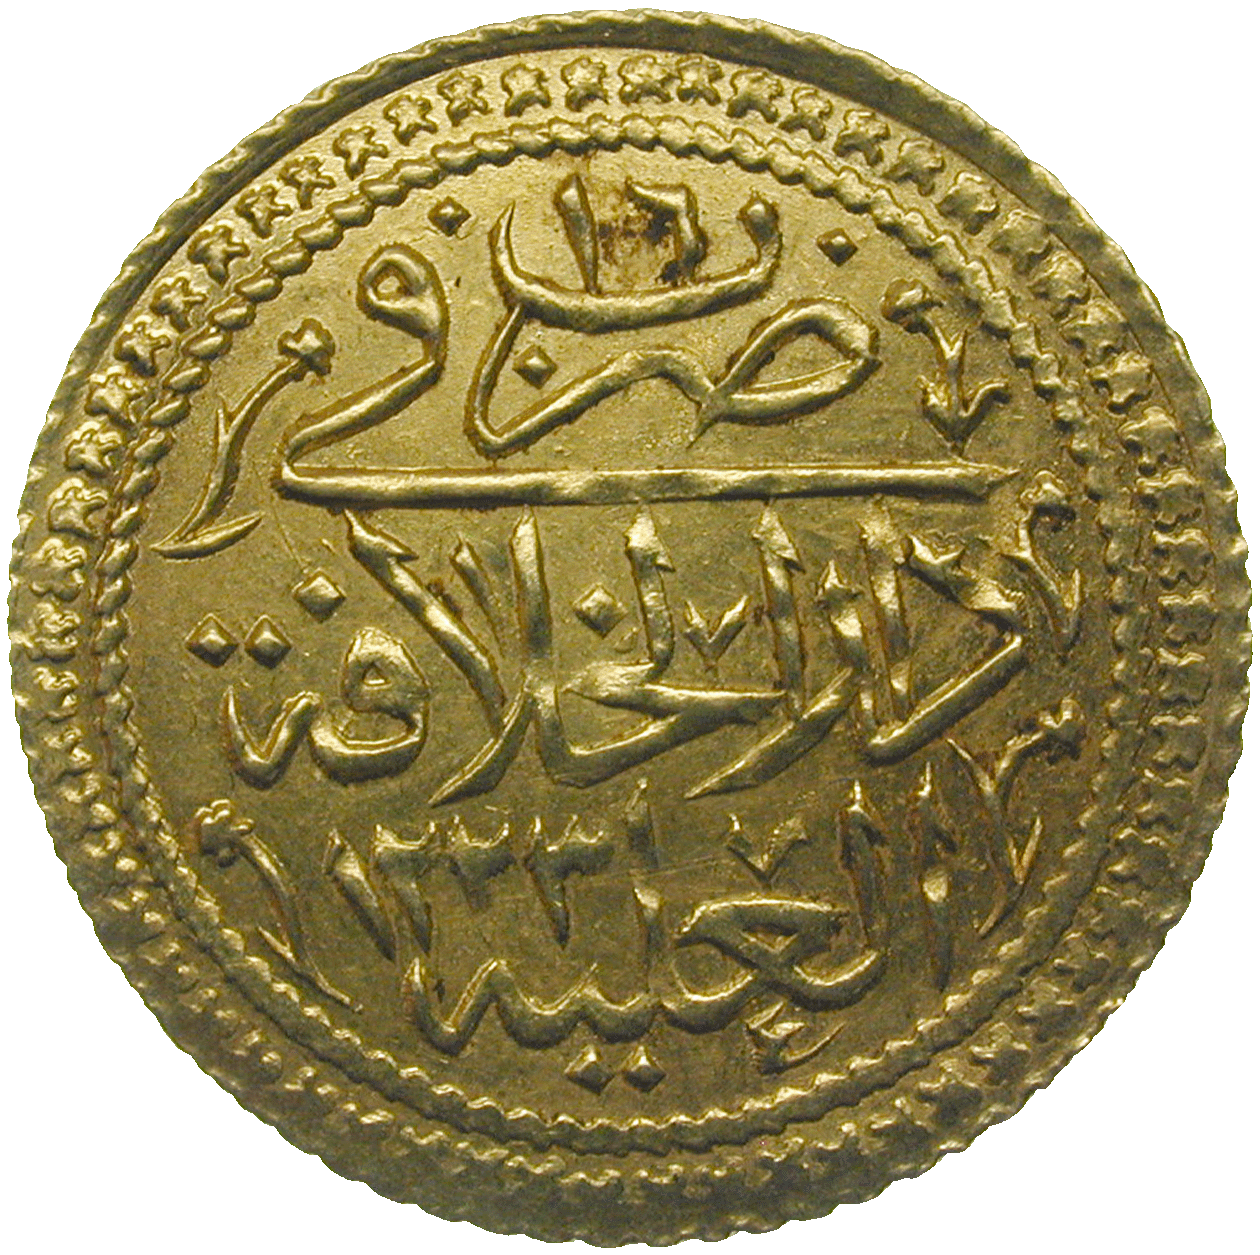 Ottoman Empire, Mahmud II, Surre Altin Year 16 (reverse)